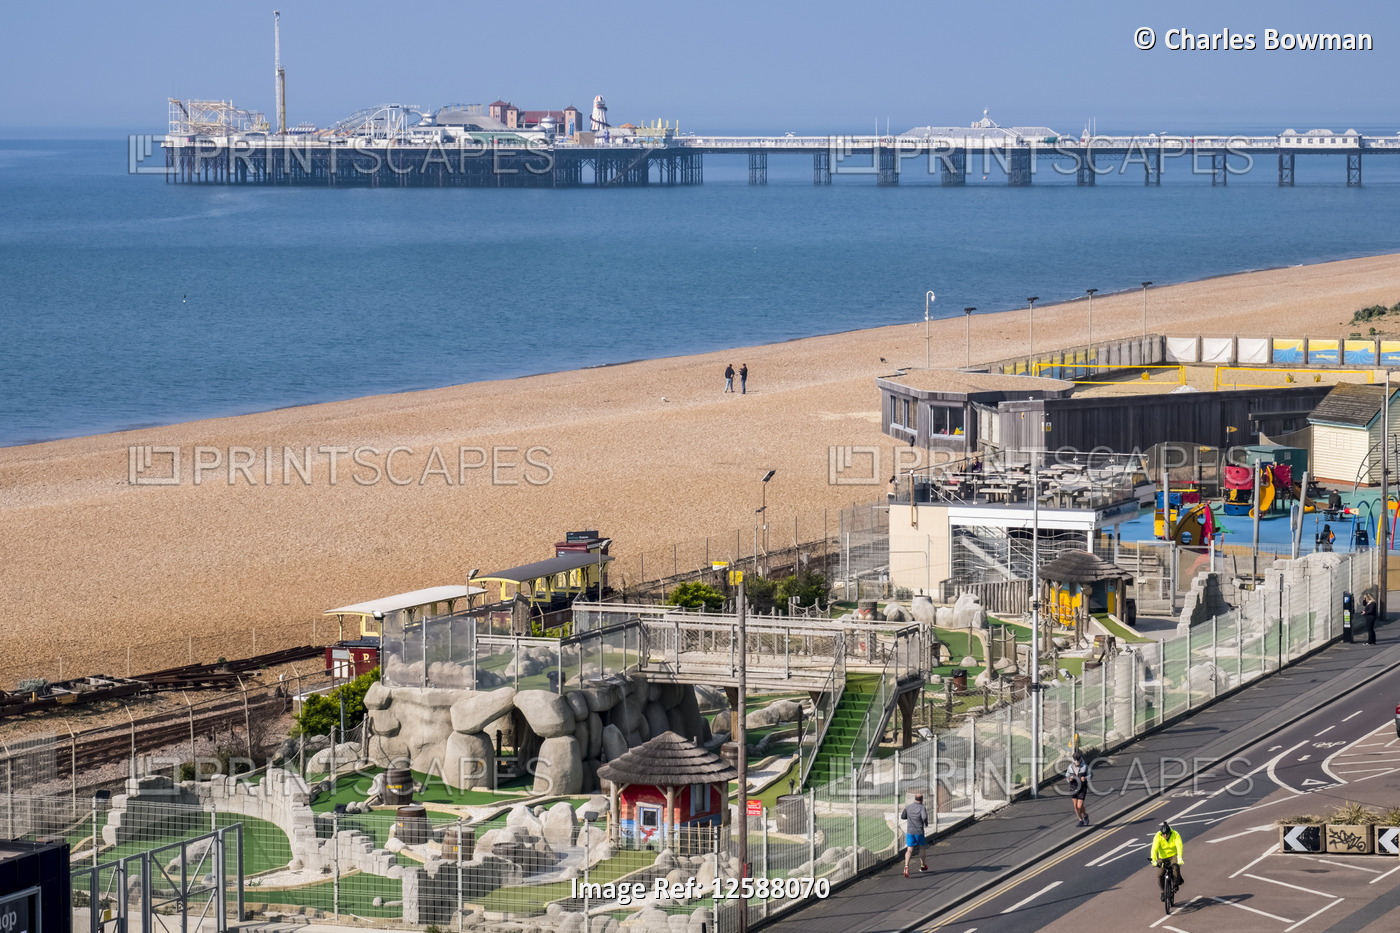 Brighton Pier; Brighton, East Sussex, England